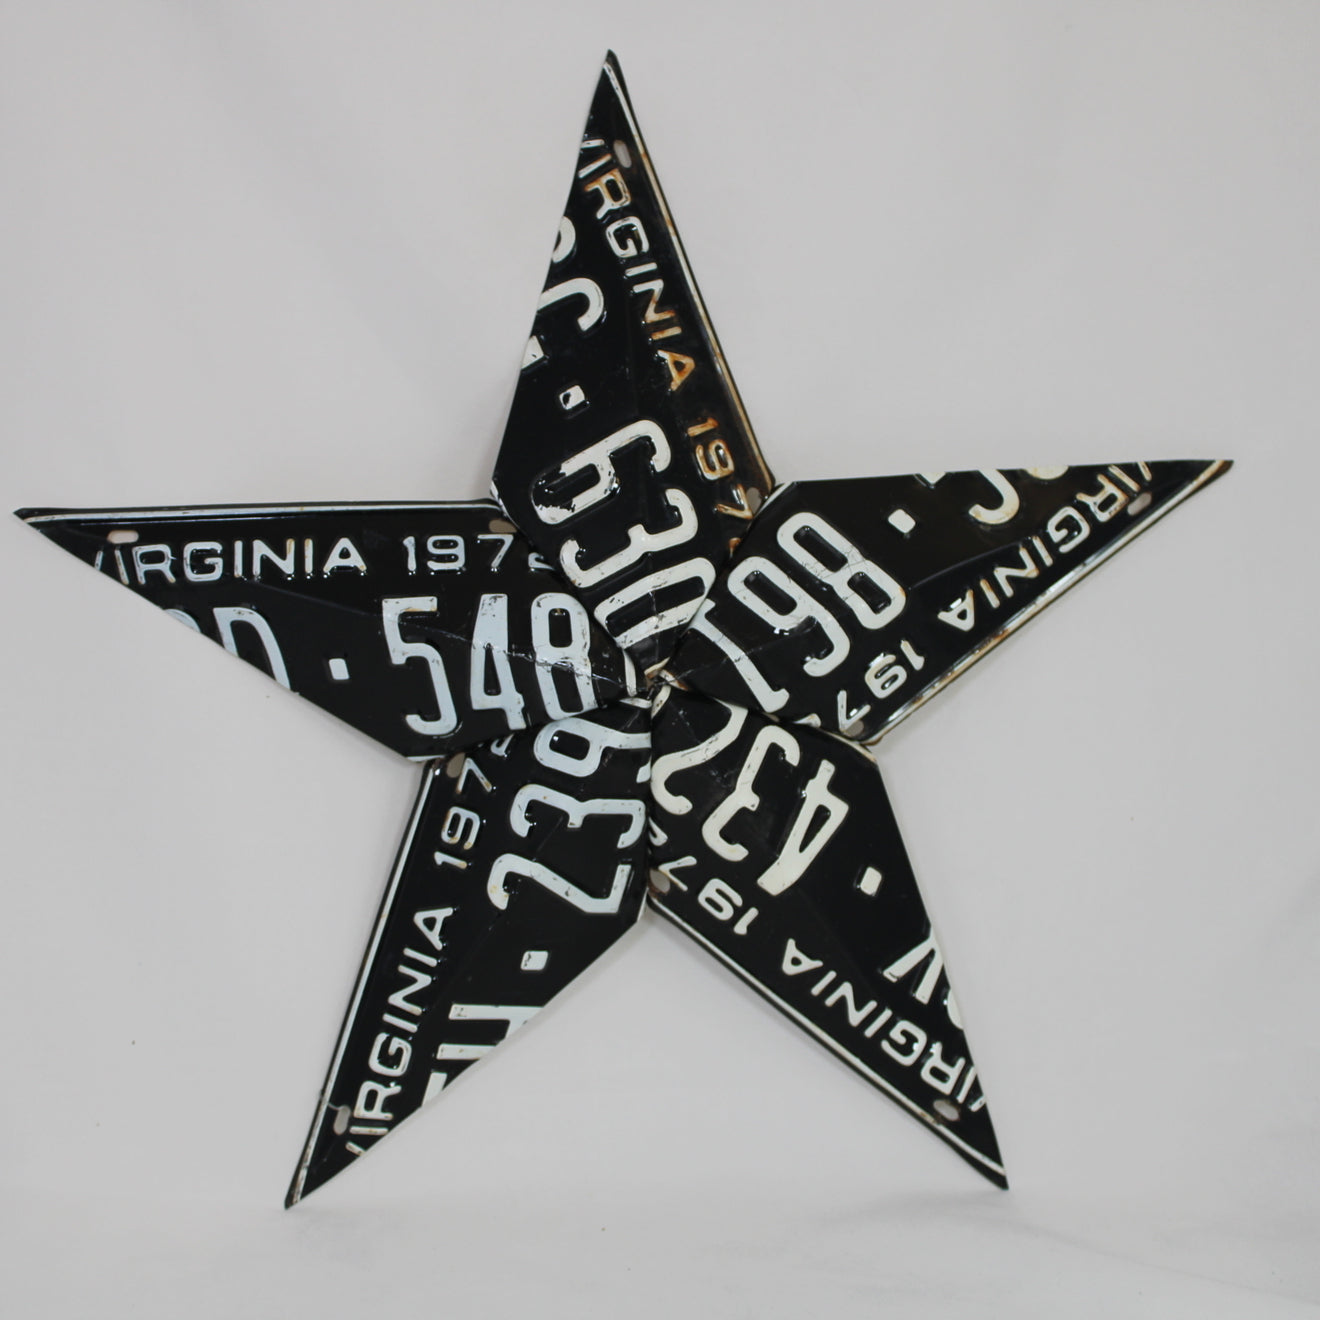 Virginia License Plate Star